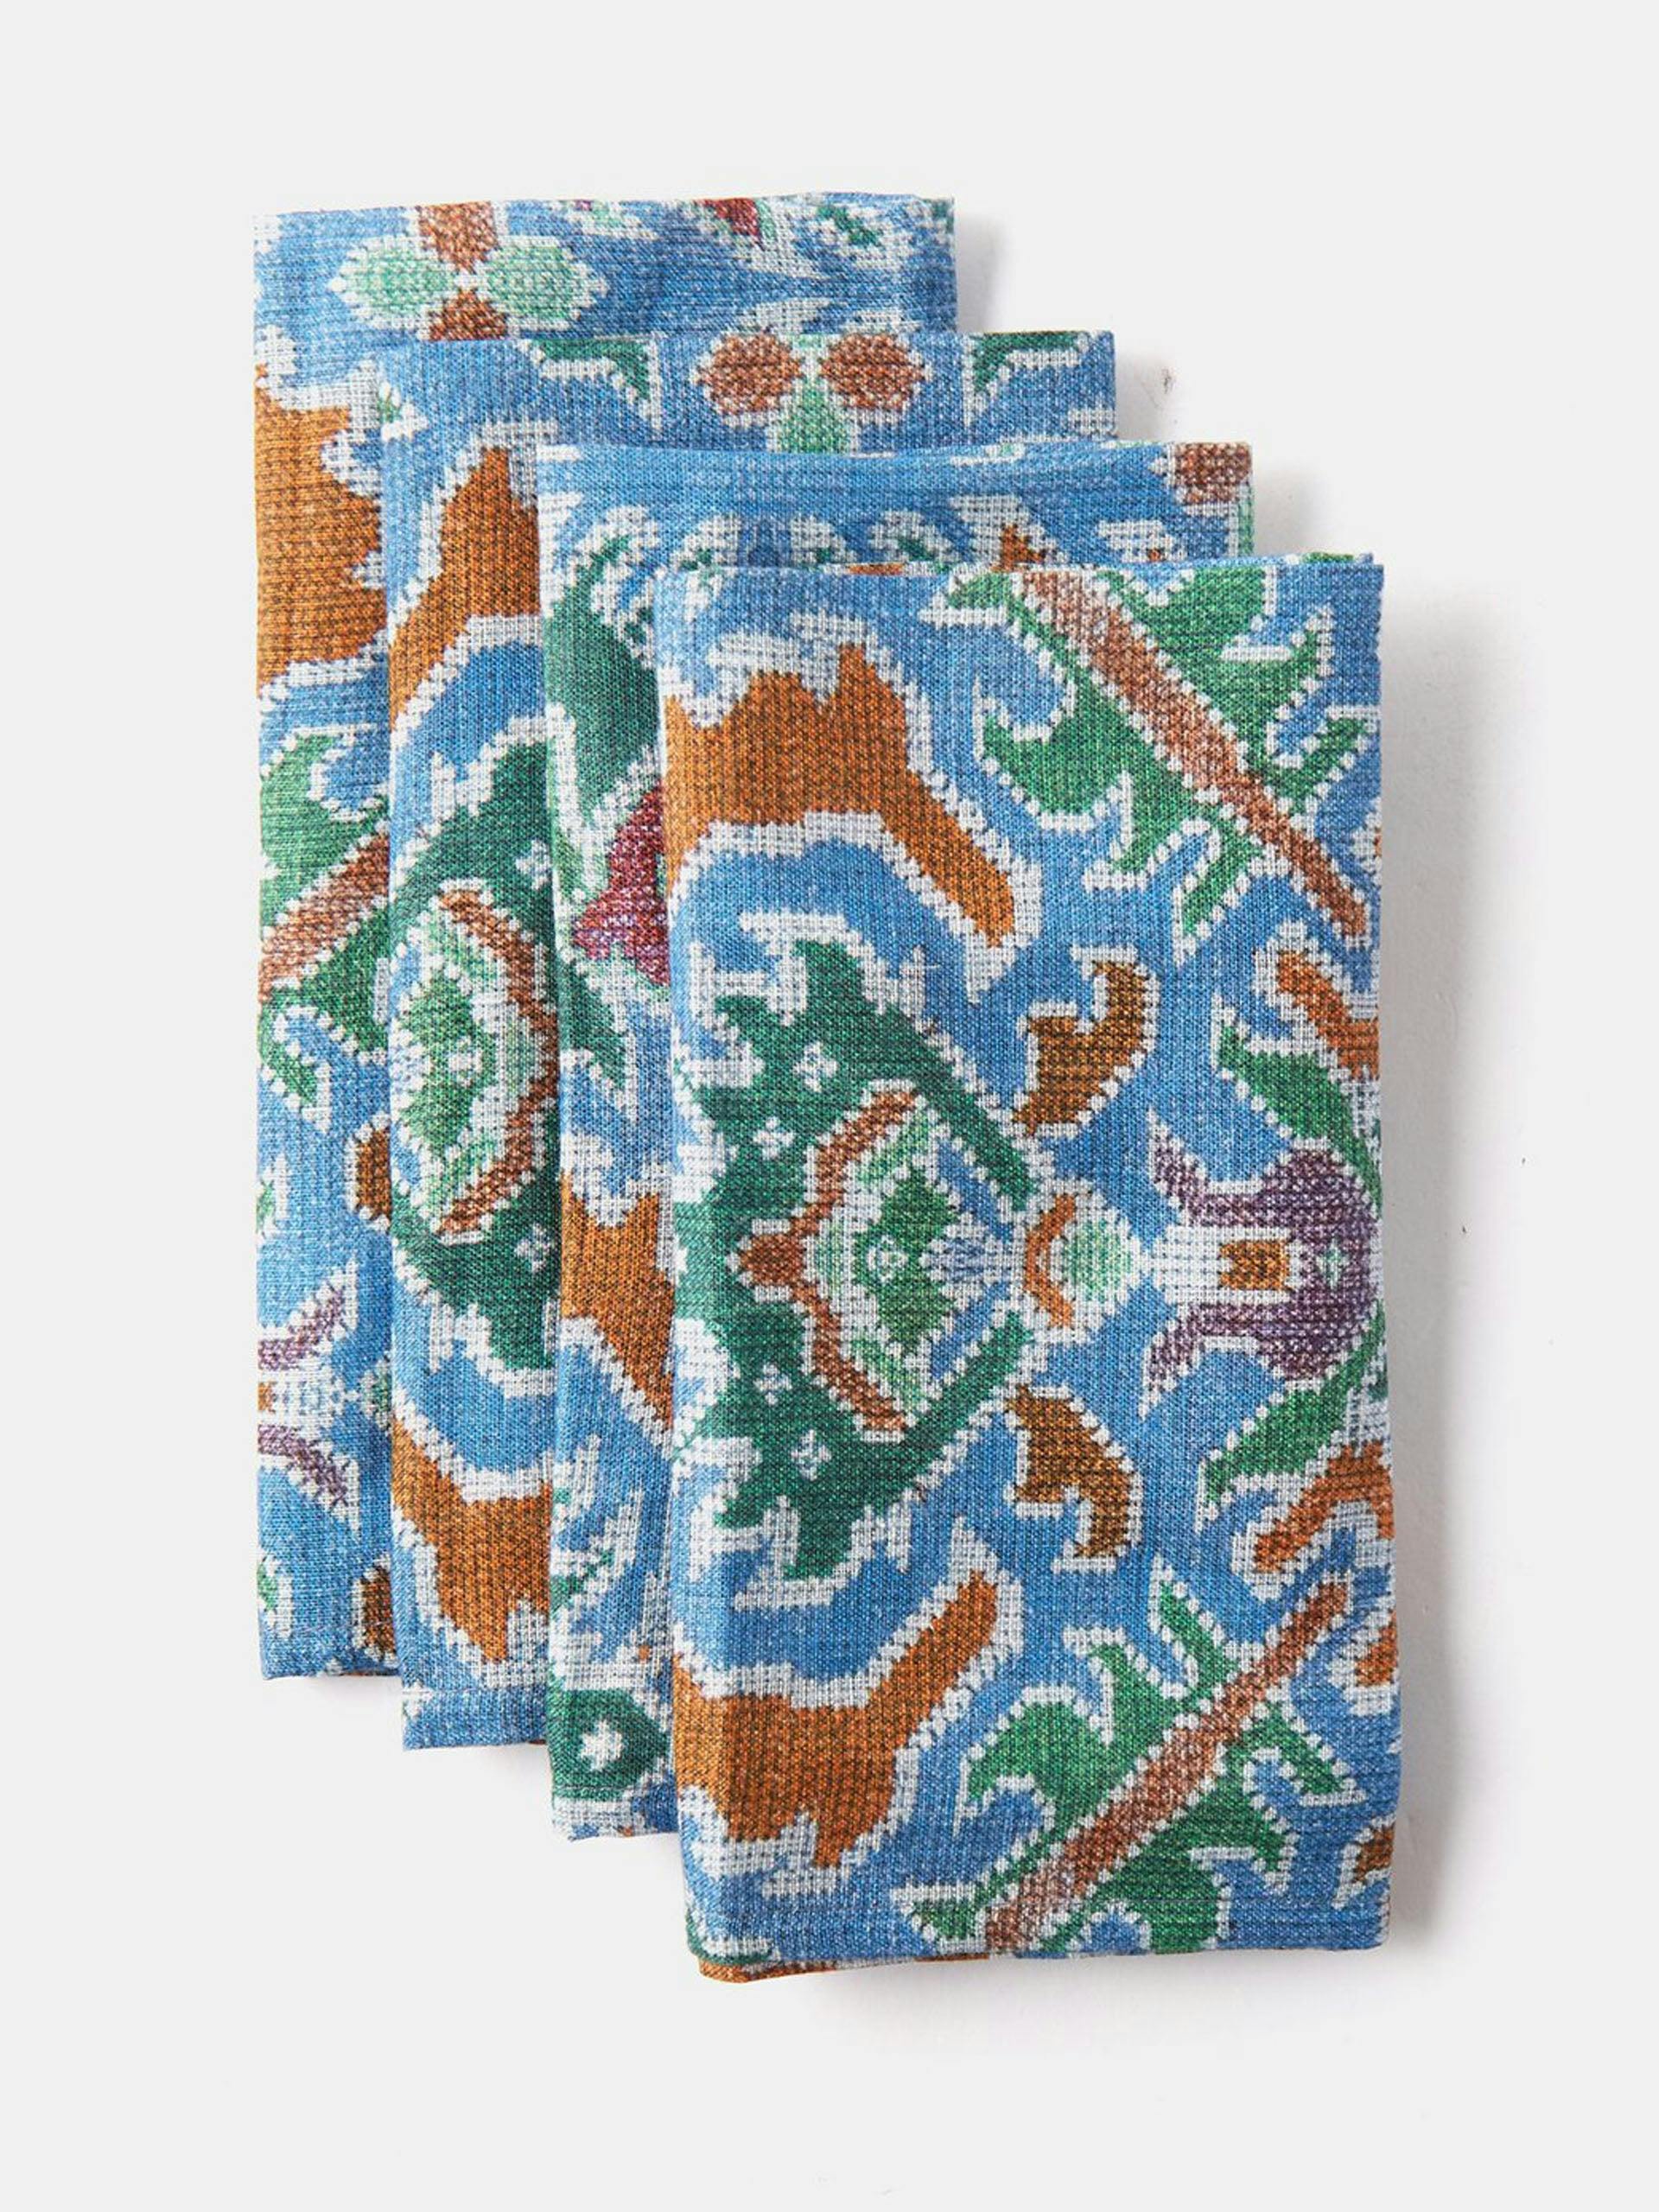 Mosaic-print linen napkins